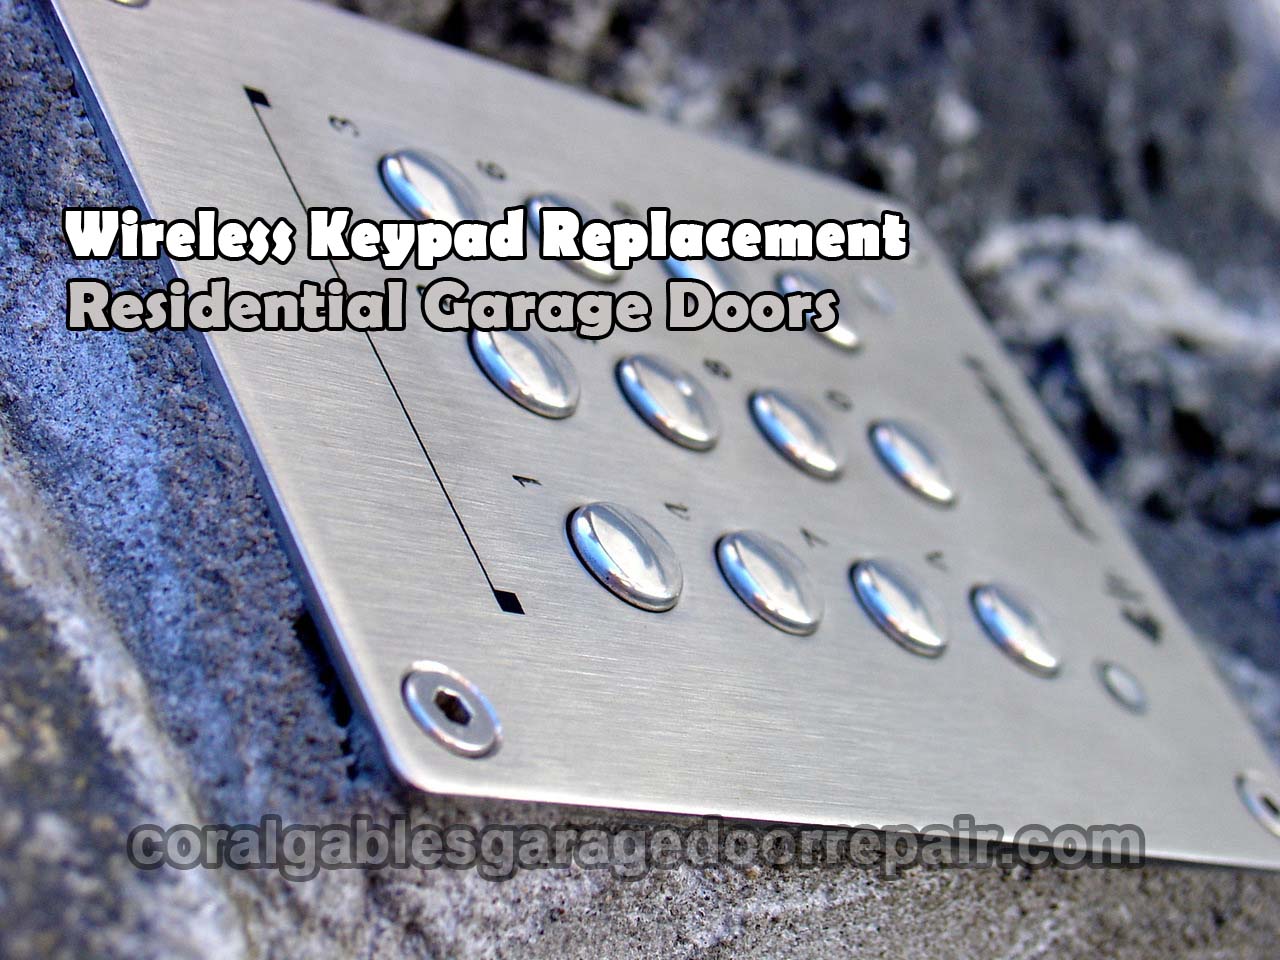 Coral-Gables-garage-door-wireless-keypad-replacement